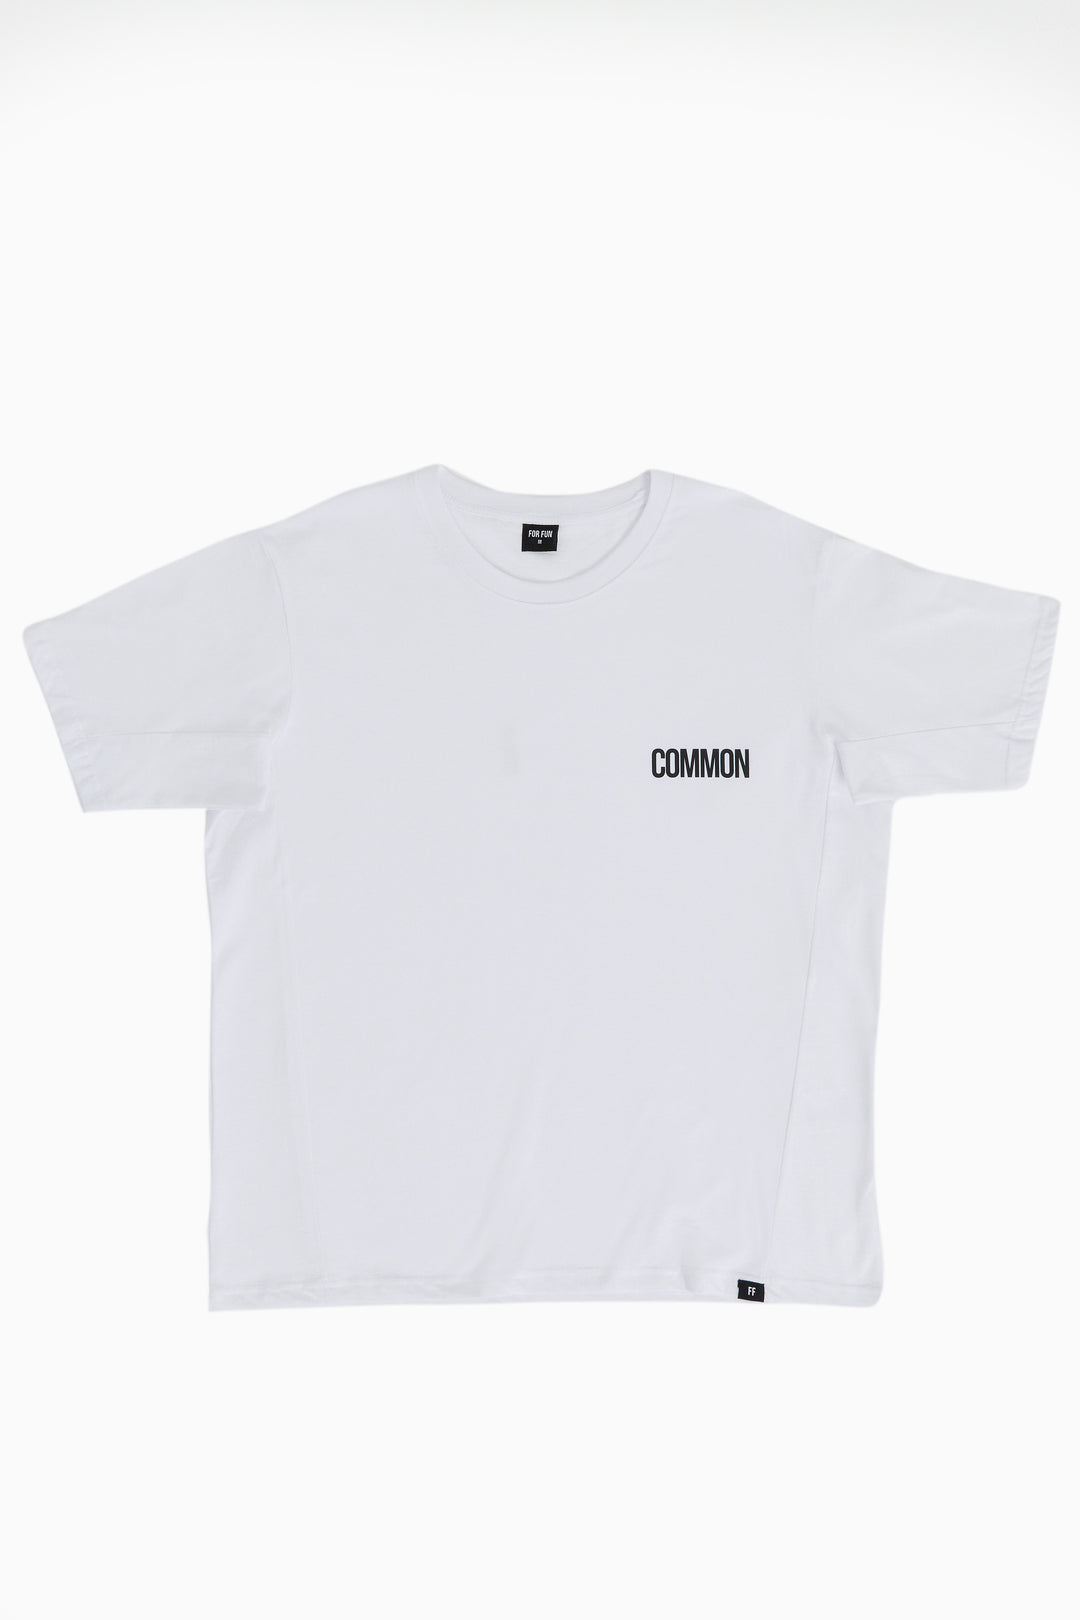 Common / Oversize T-shirt